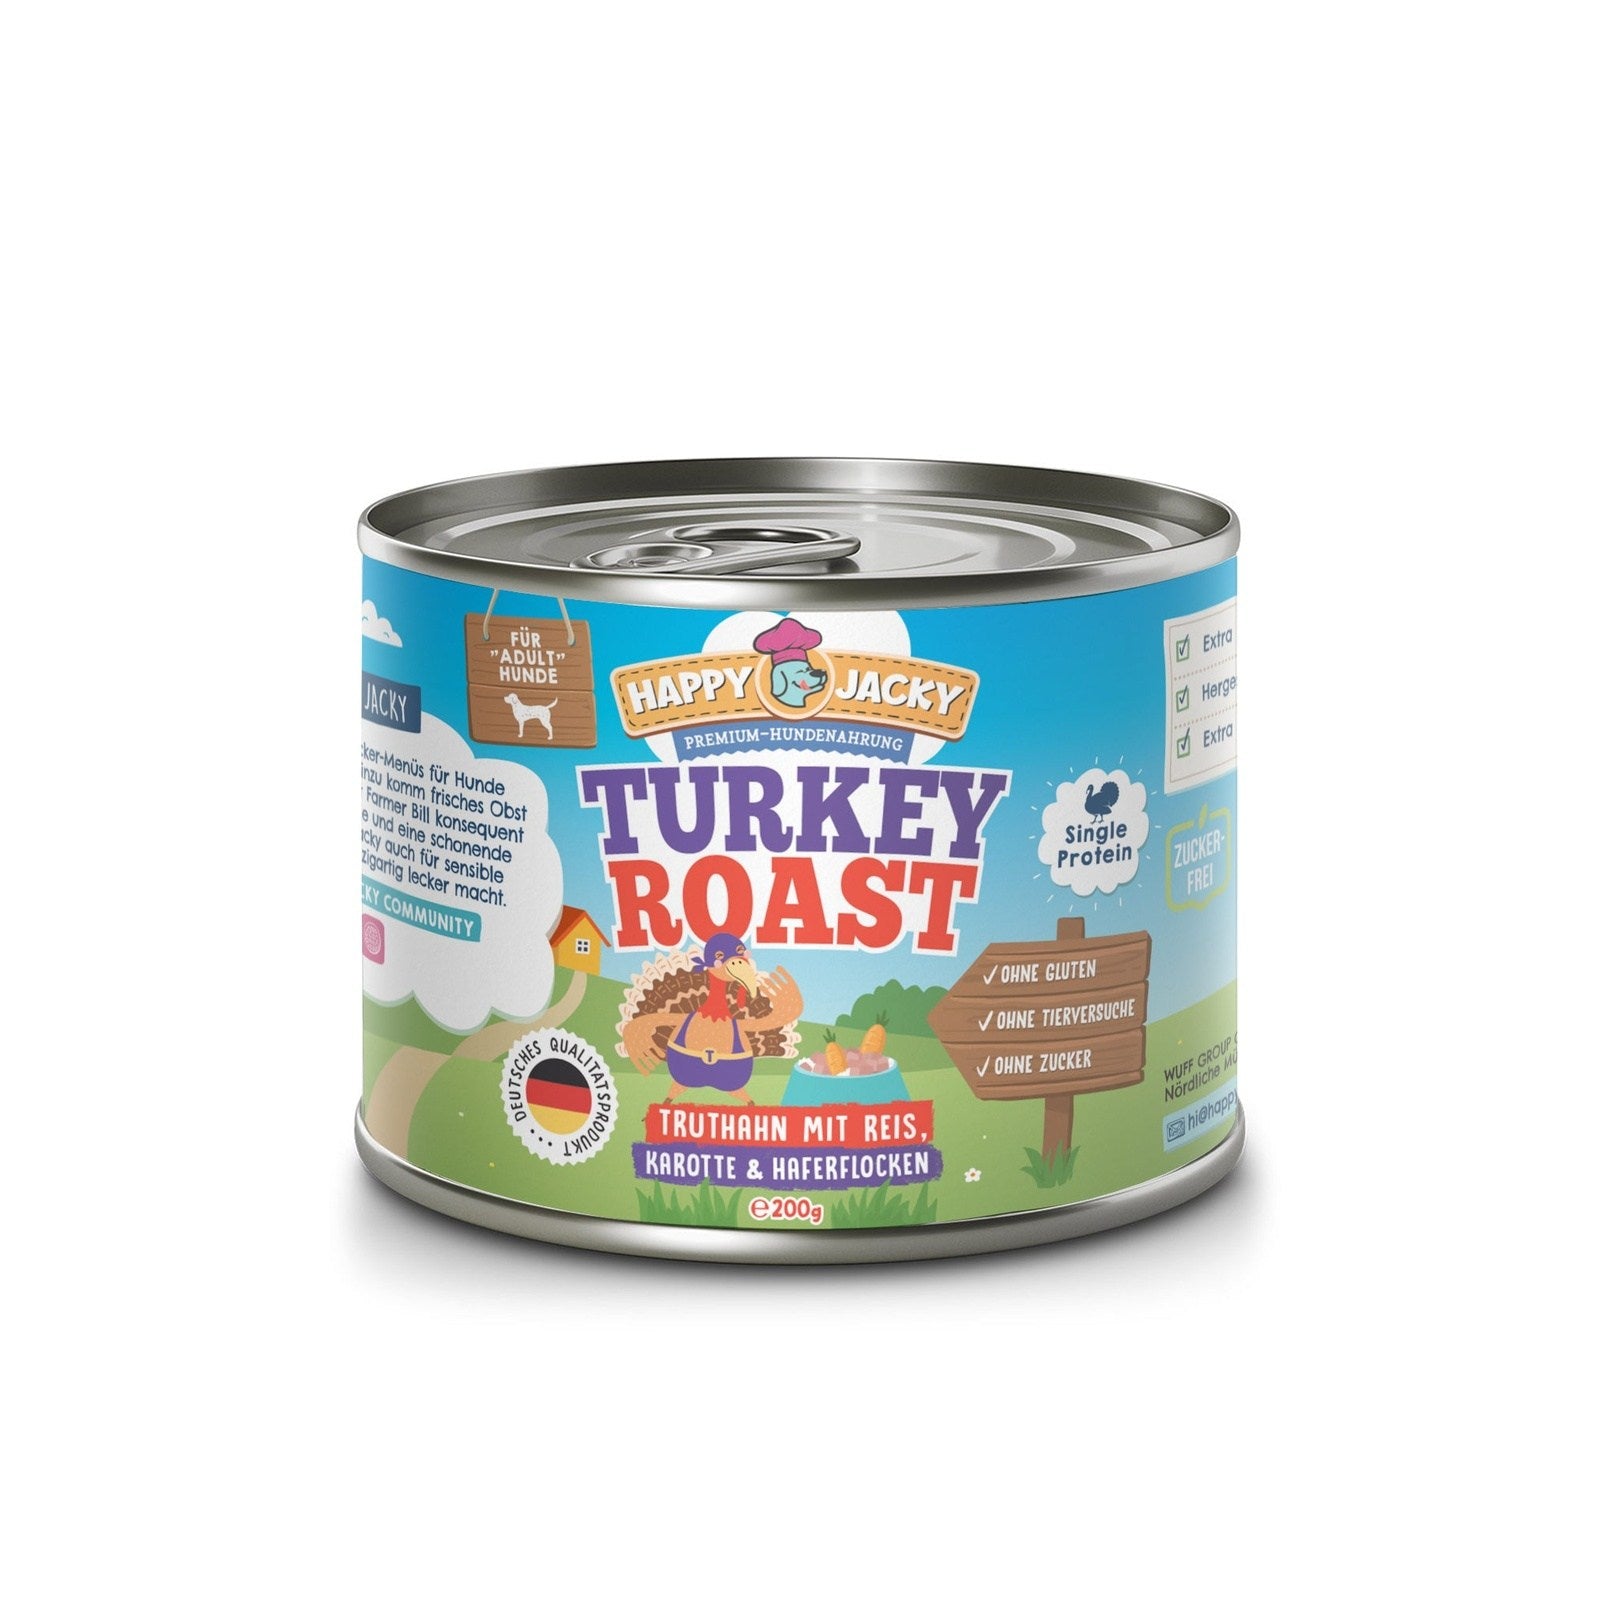 Turkey Roast - Truthahn mit Reis, Karotte & Haferflocken HAPPY JACKY